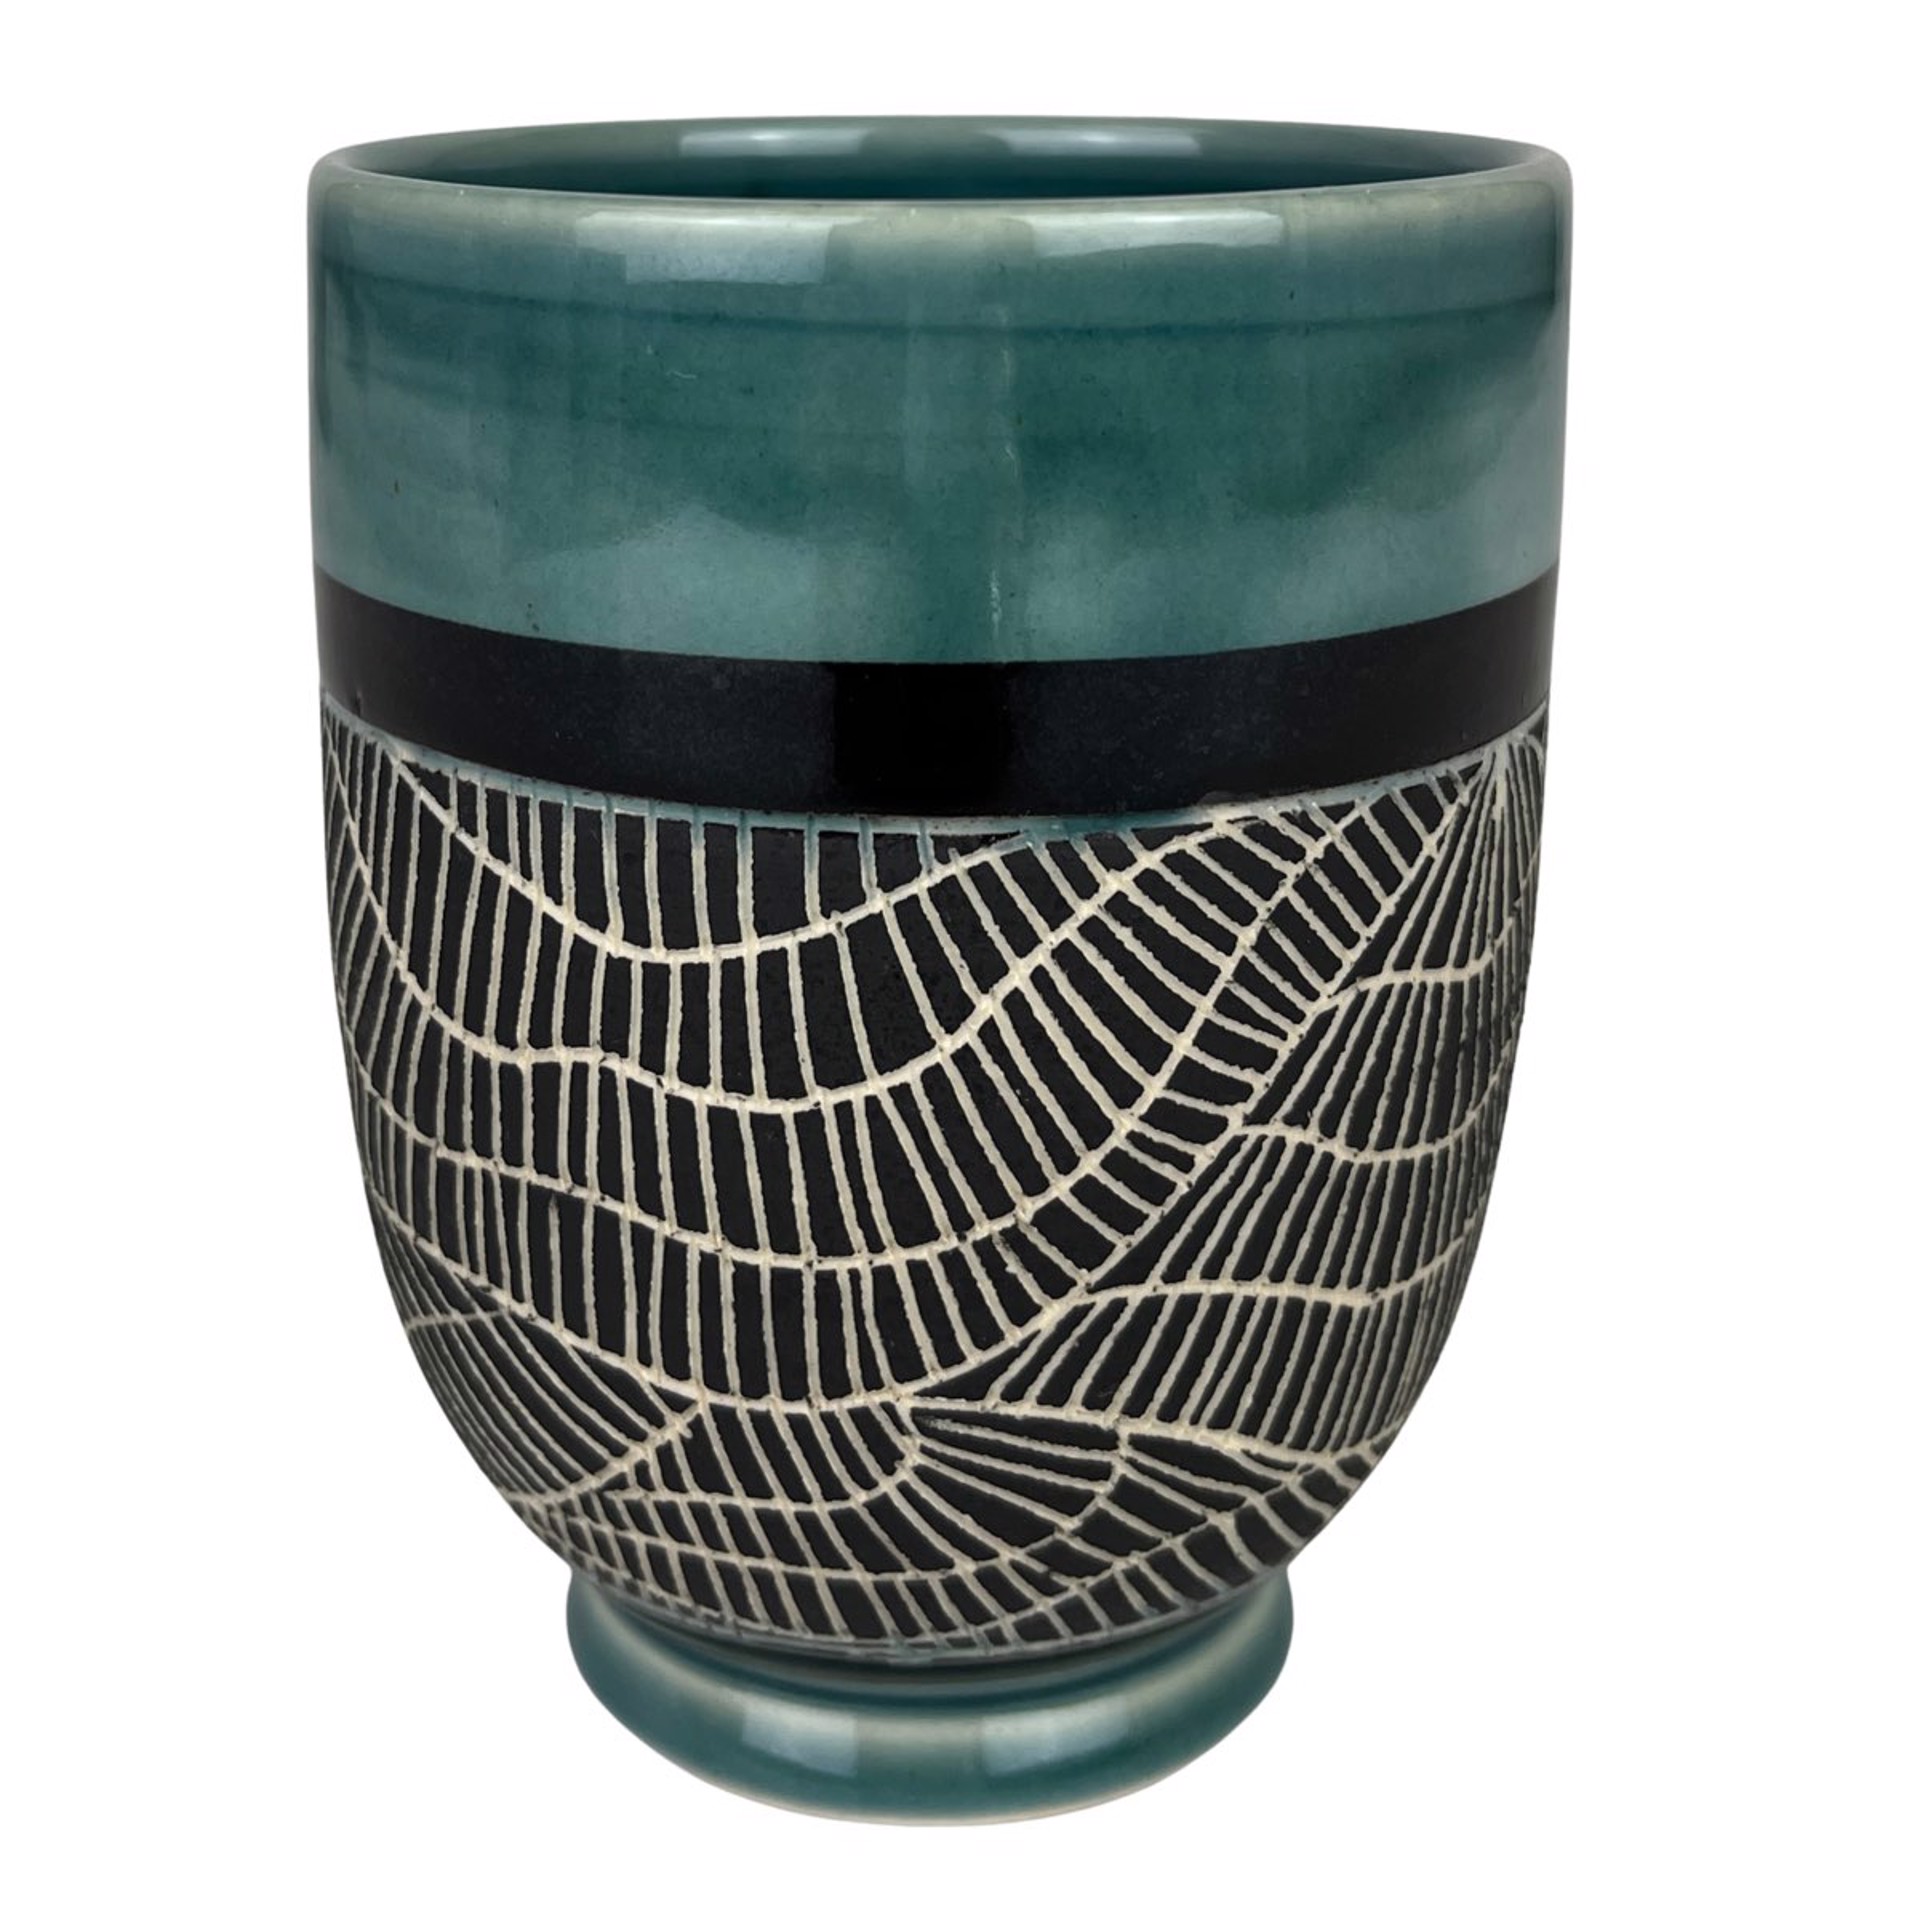 Sgraffito Cup by Mary Lynn Portera